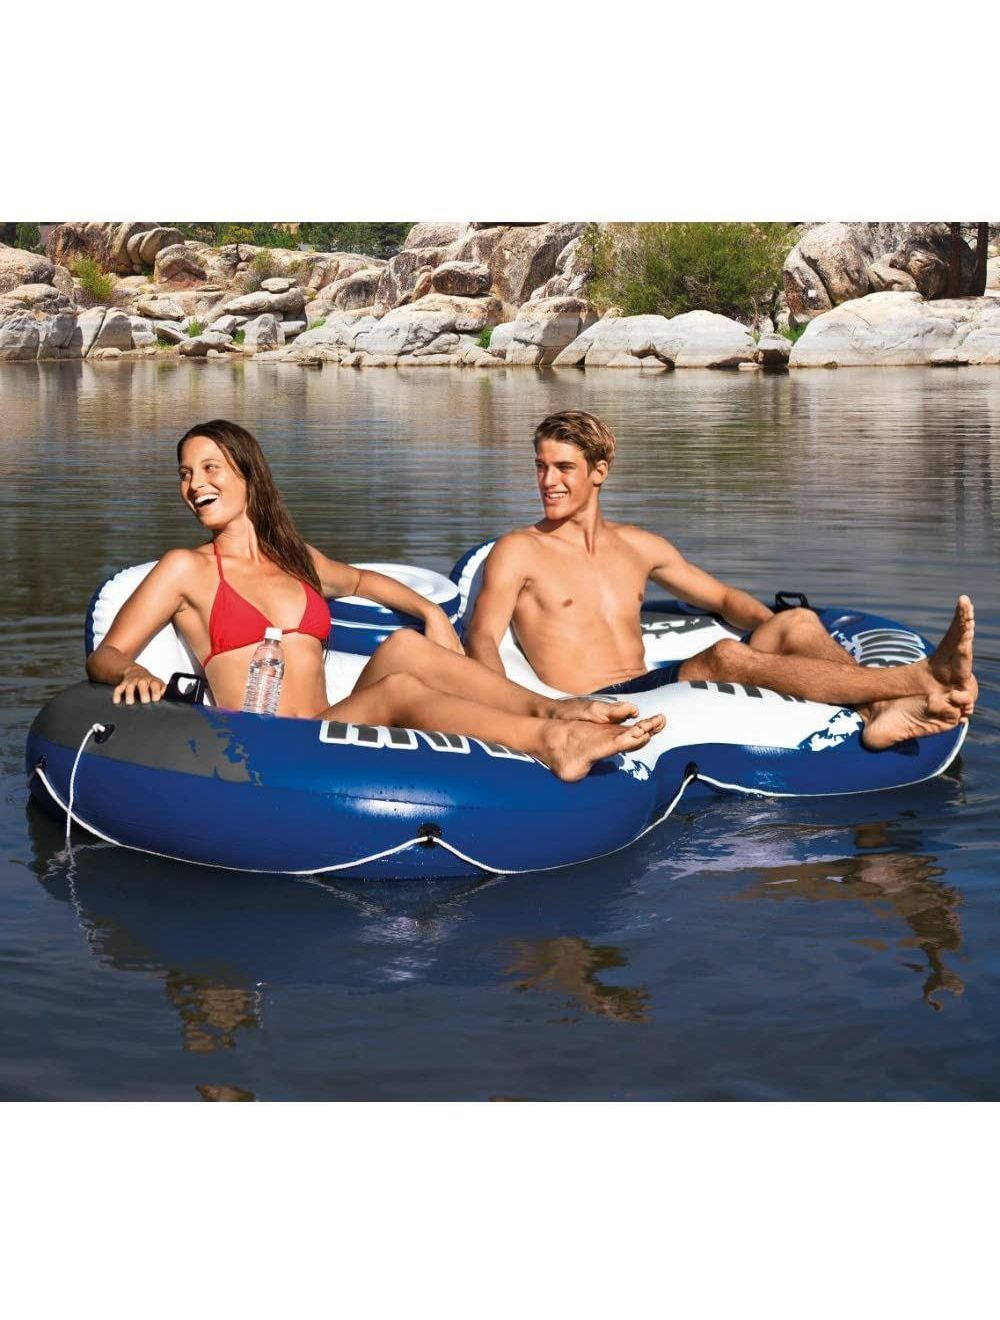 Intex River Run II Sport Lounge, Inflatable Water Float, 95 X 62